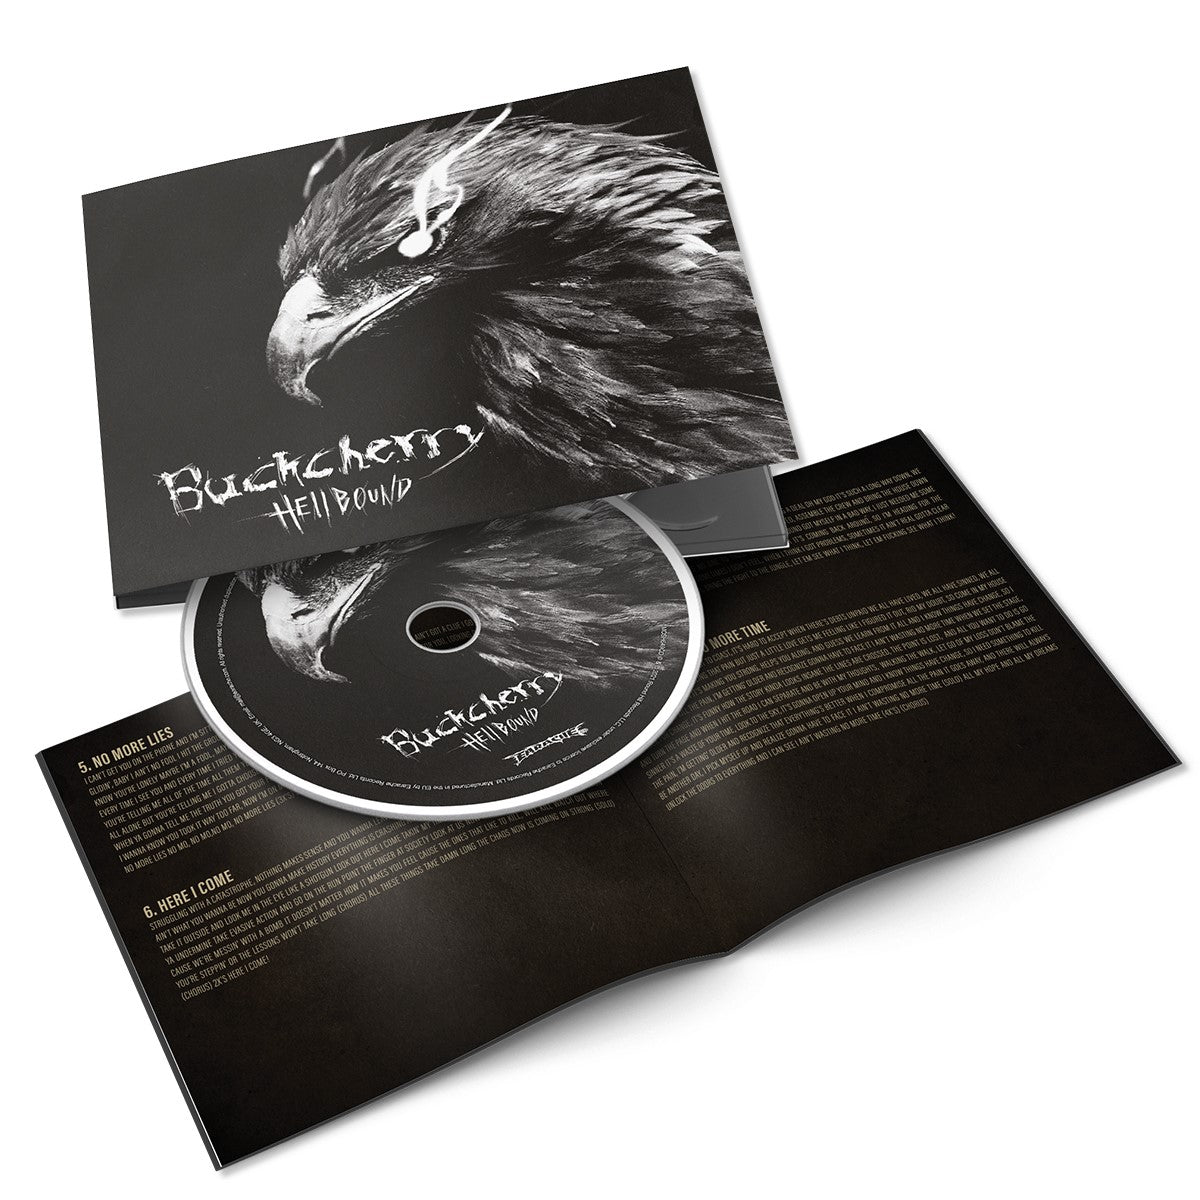 Buckcherry "Hellbound" Digipak CD